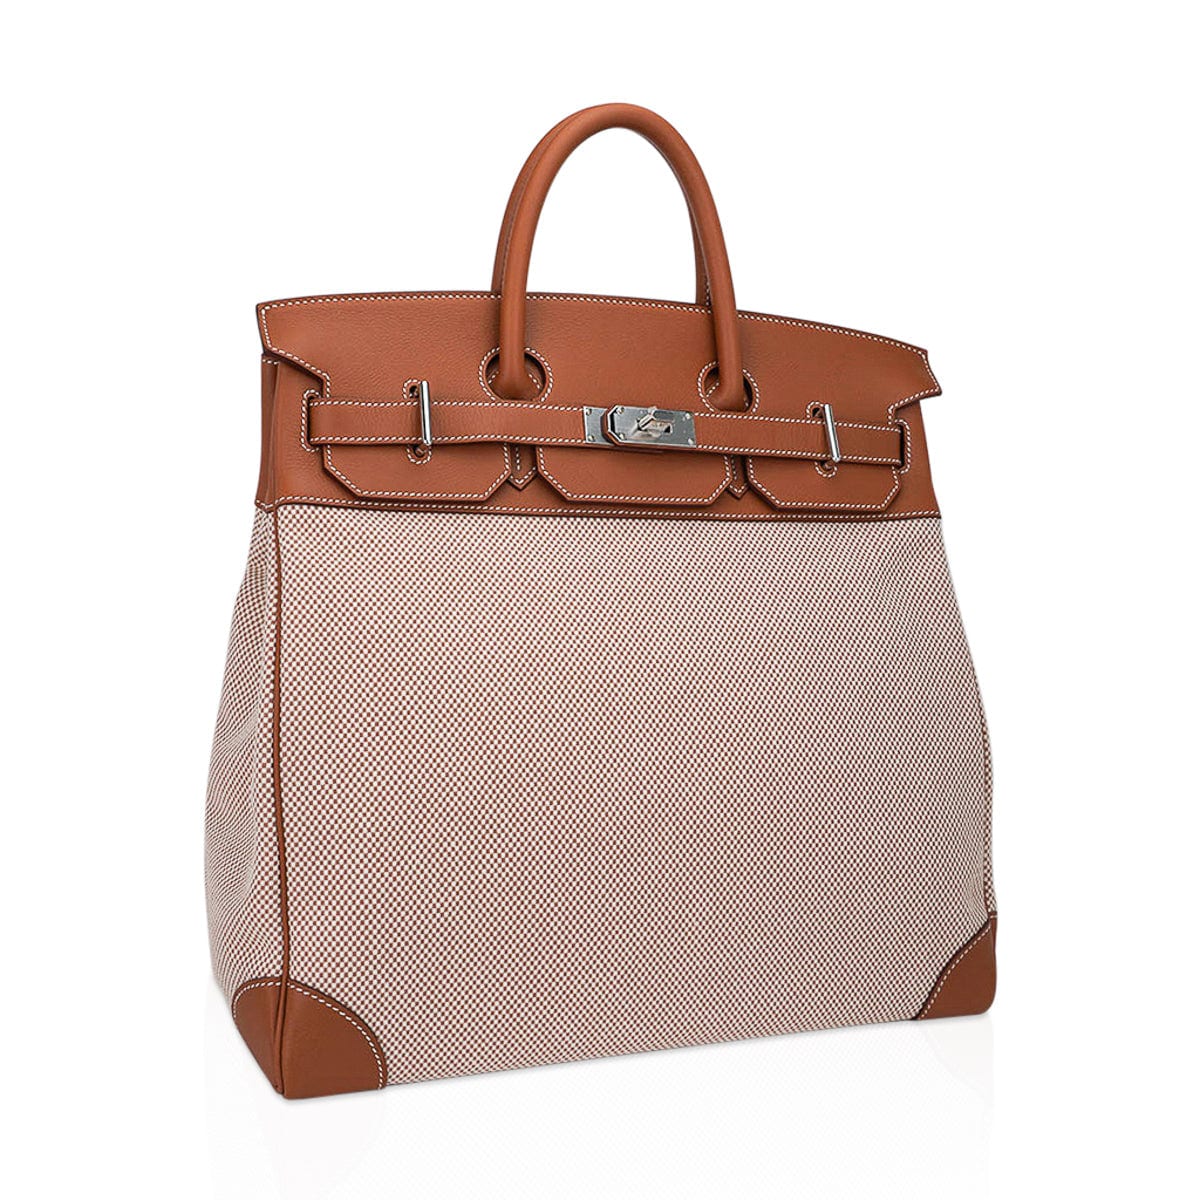 Balenciaga Handbags: Hermes Constance Bag in celebrities' life